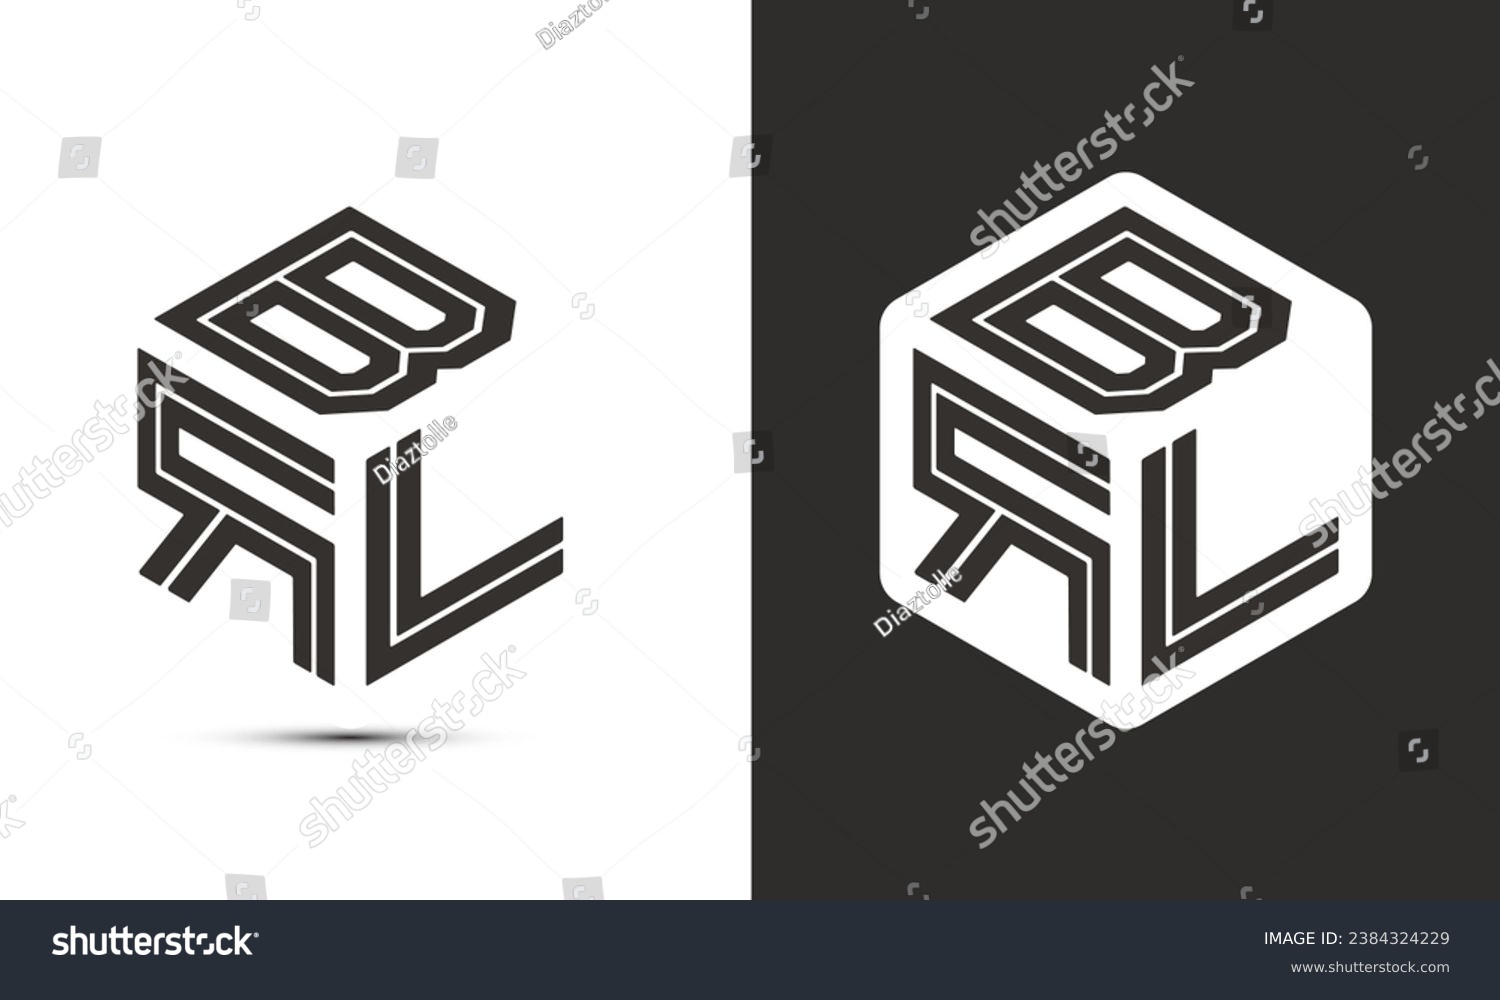 SVG of BRL letter logo design with illustrator cube logo, vector logo modern alphabet font overlap style. Premium Business logo icon. White color on black background svg